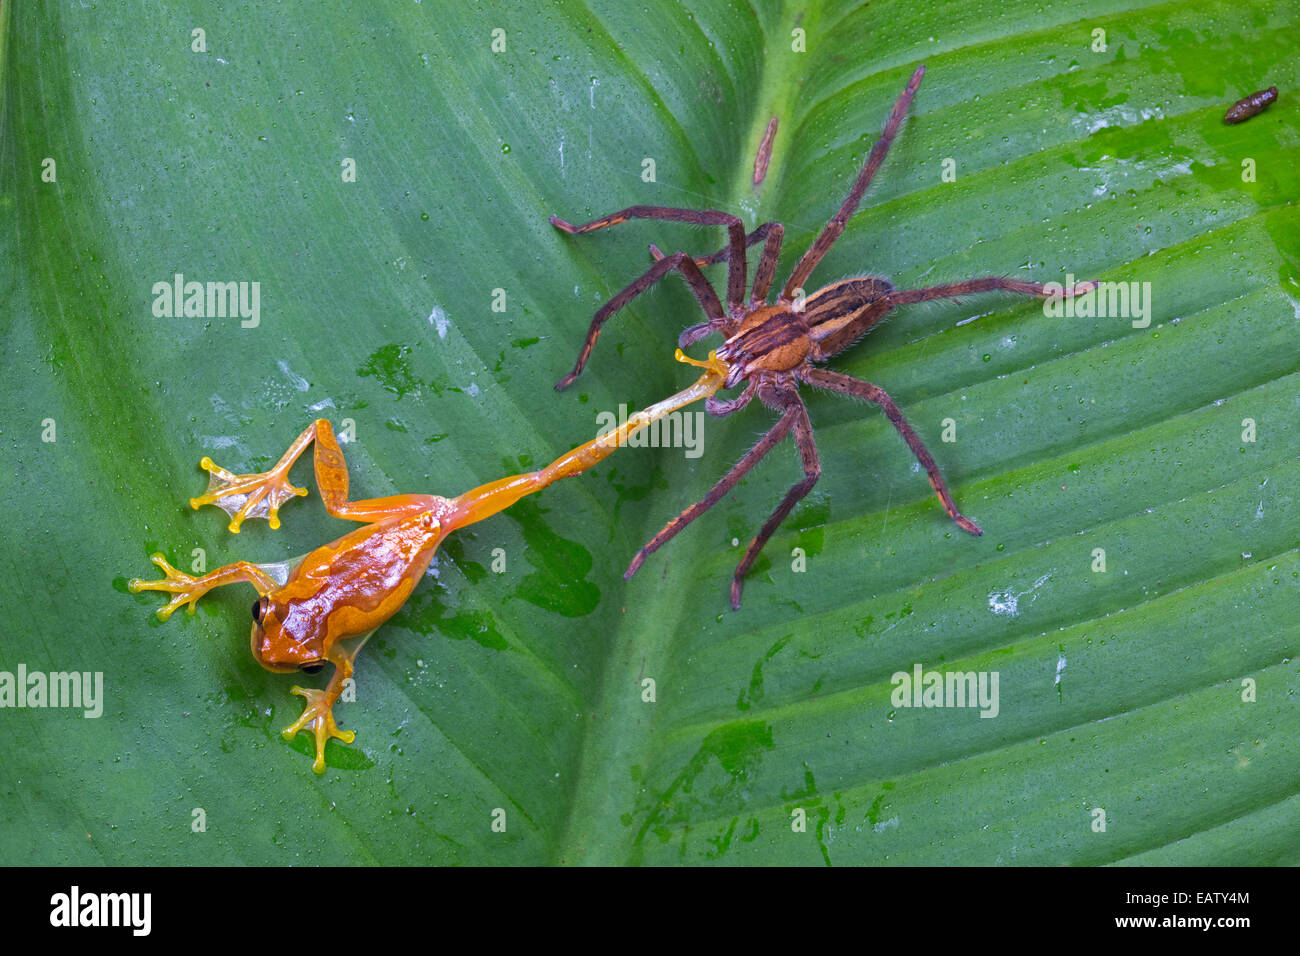 A wandering spider, Cupiennius getazi, attacking an hourglass tree frog, Dendrosophus ebrecattus. Stock Photo